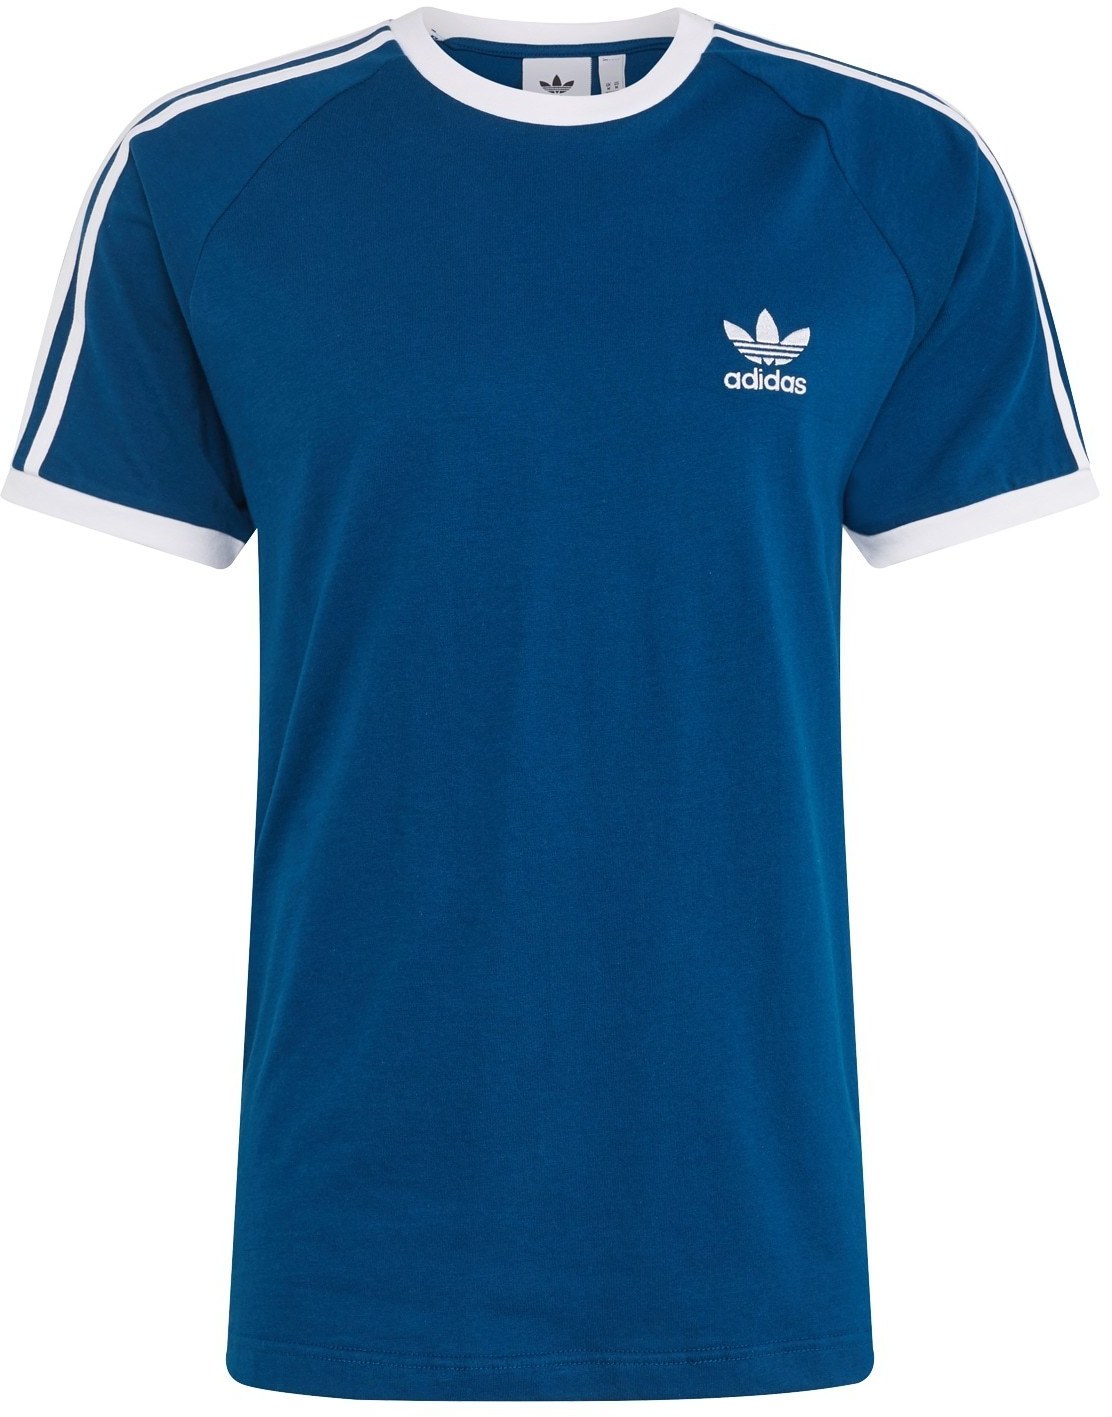 Adidas 3-Stripes T-Shirt legend marine